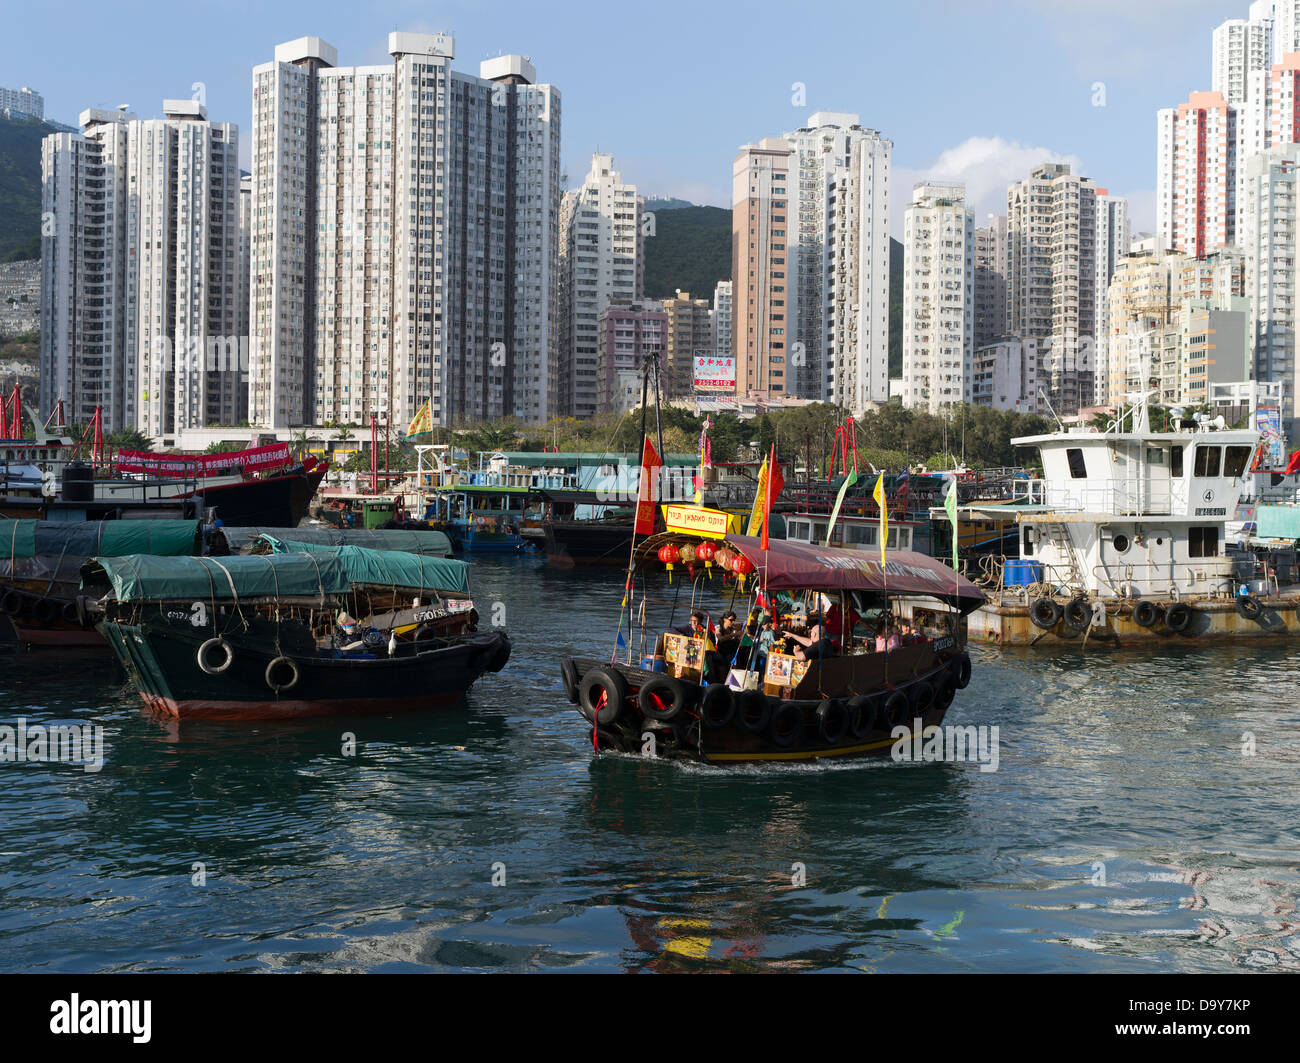 dh Chinese tourist sampan ABERDEEN HARBOUR HONG KONG ASIA High rise residential skyscraper flats boats island Stock Photo